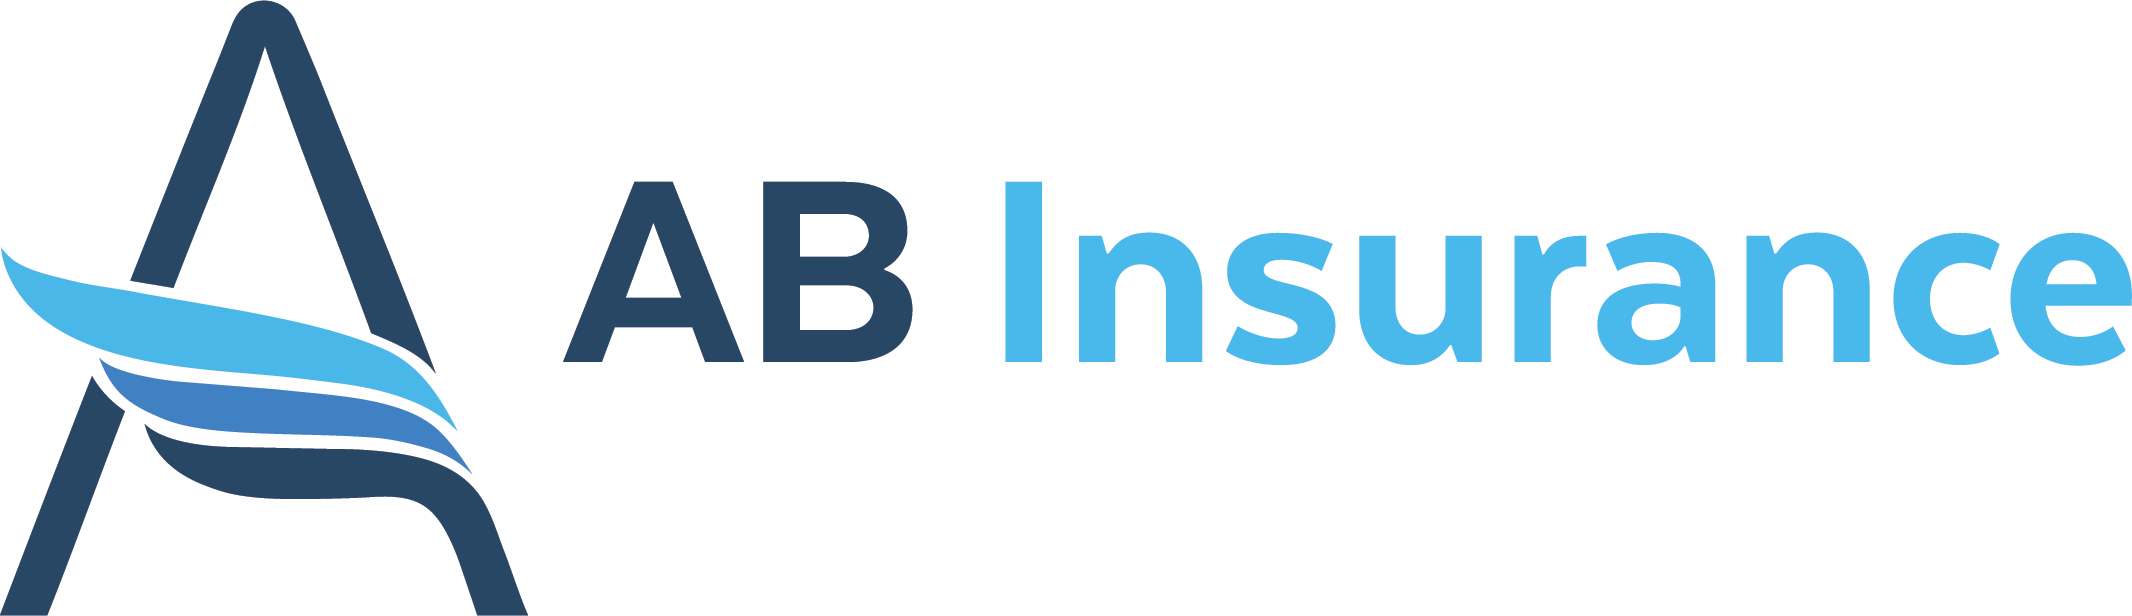 ABInsurance-primary-logo